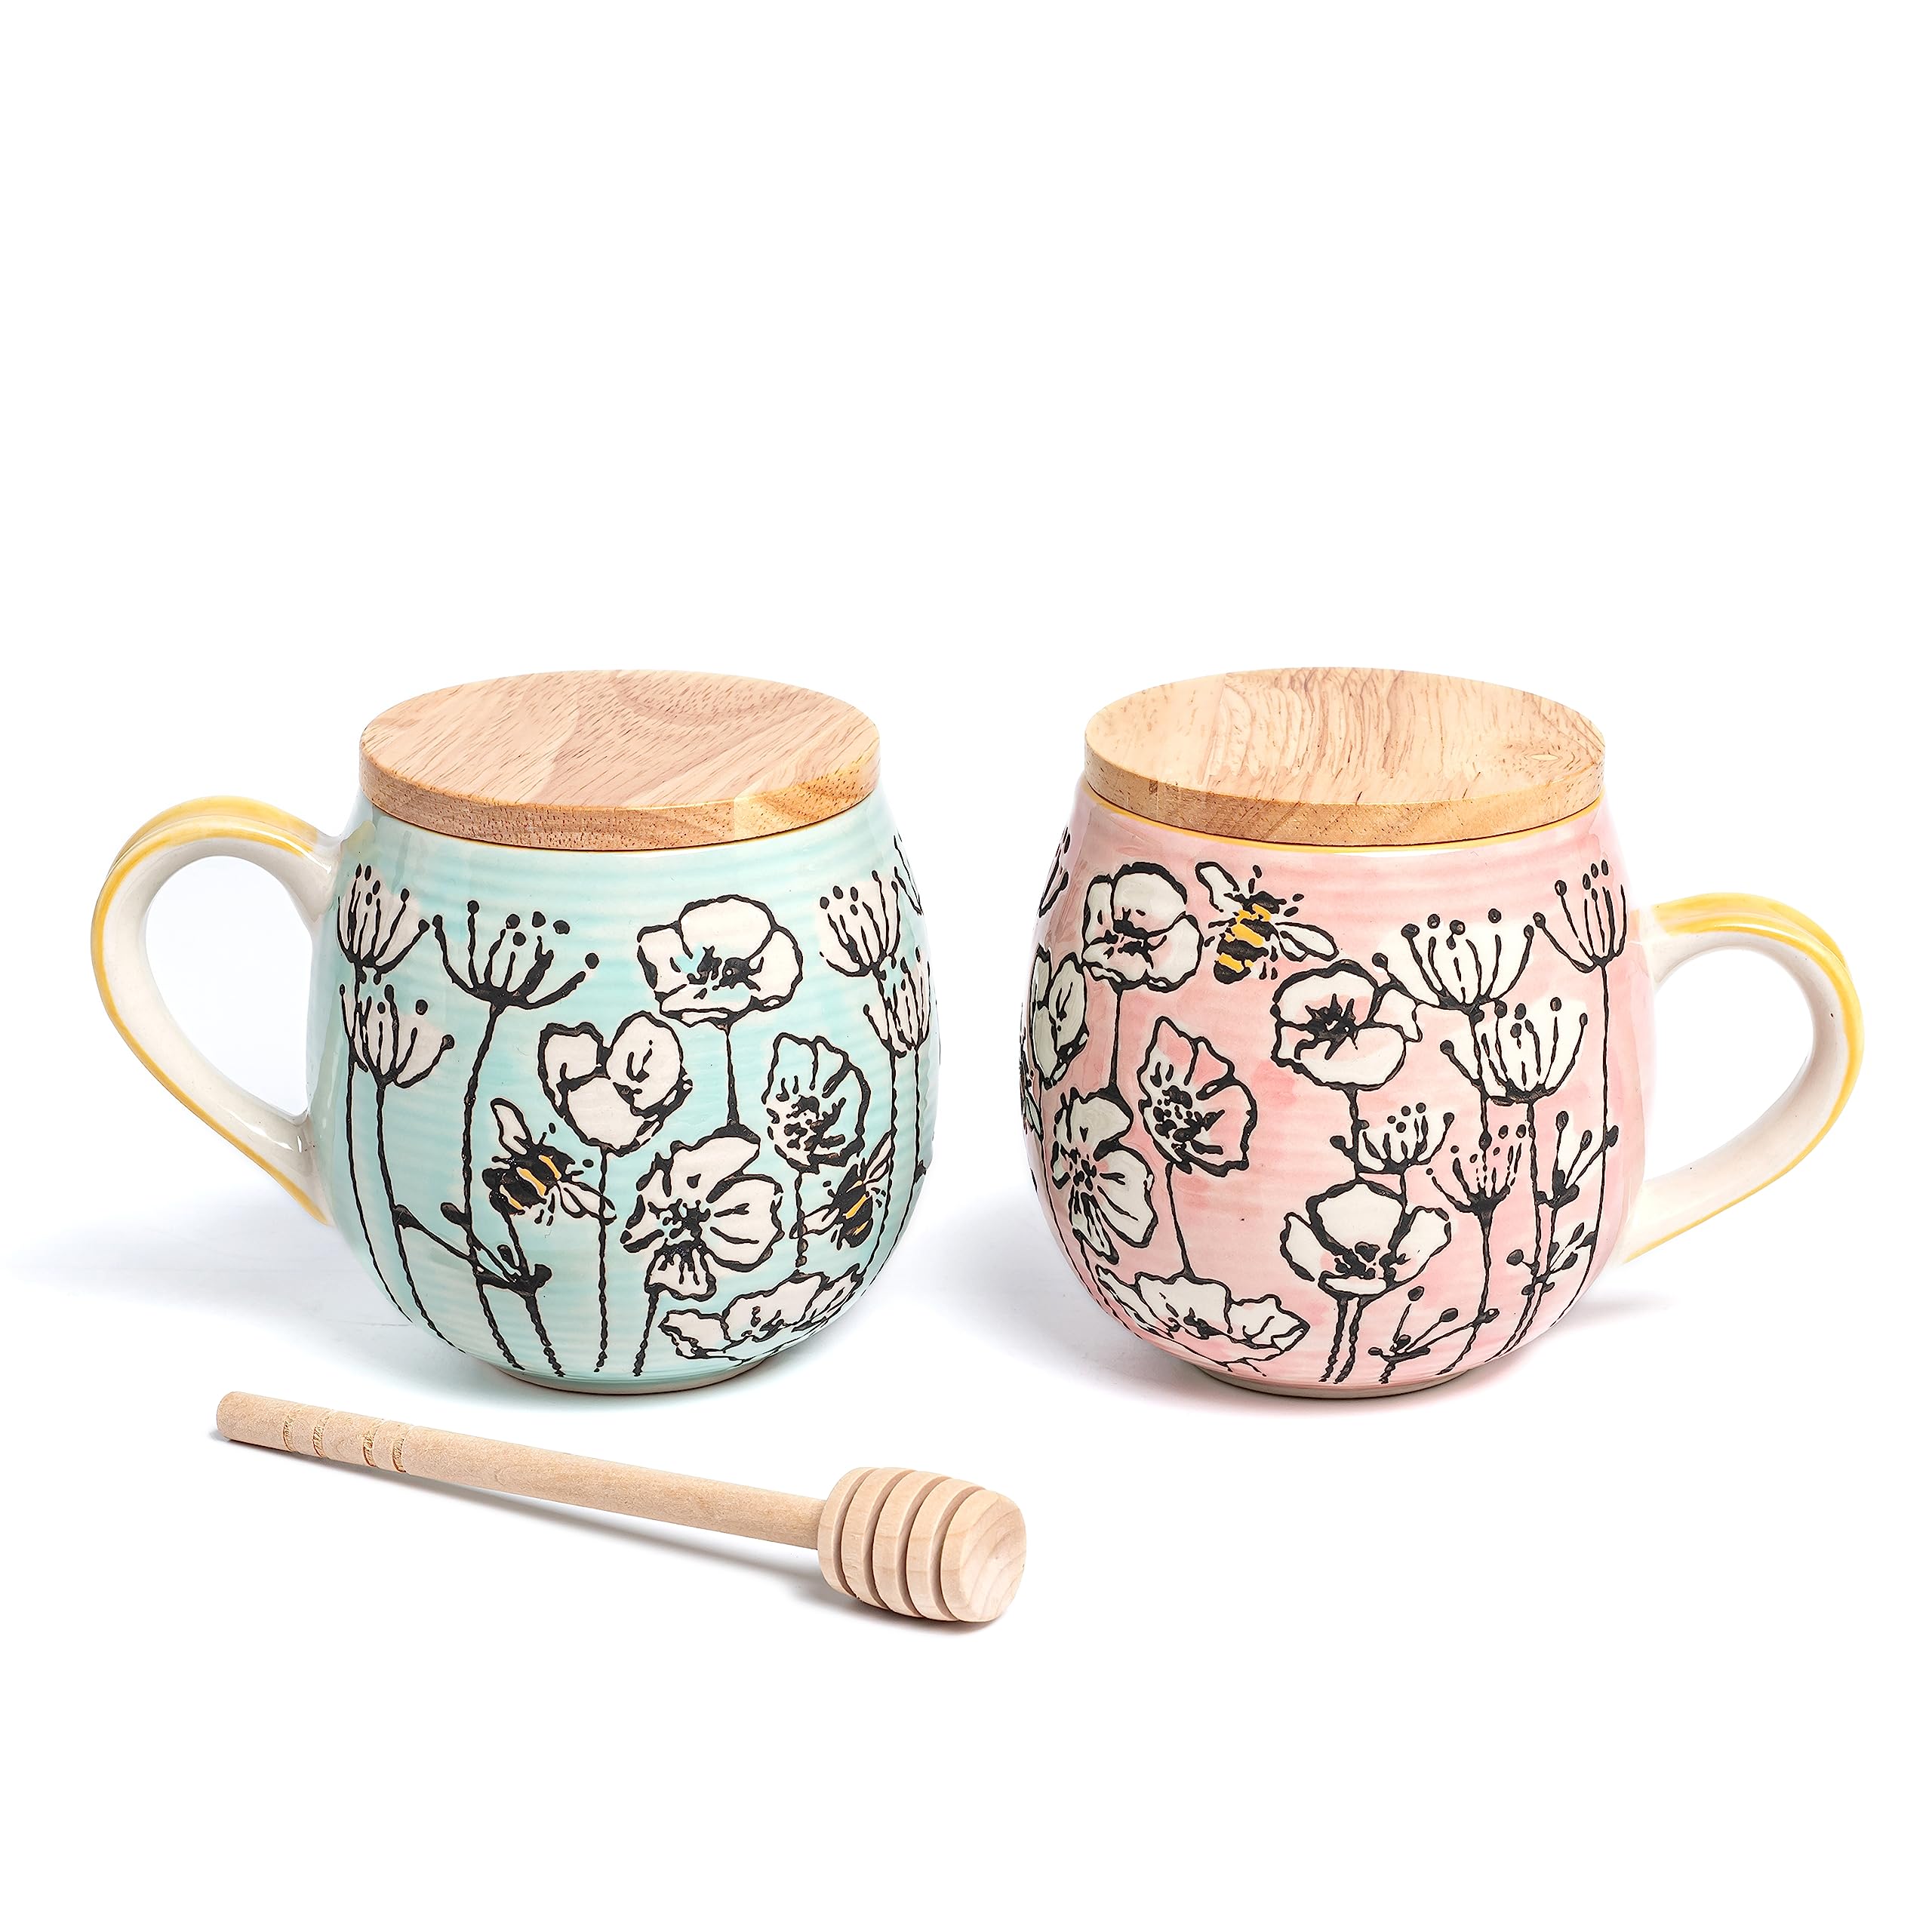 Taimei Teatime Coffee Mugs,16.9 oz Mug Set of 2, Large Ceramic Coffee Mug with Lid, Handpainted Bee and Floral Big Mug，Seasonal Gift Set, Microwave and Dishwasher Safe